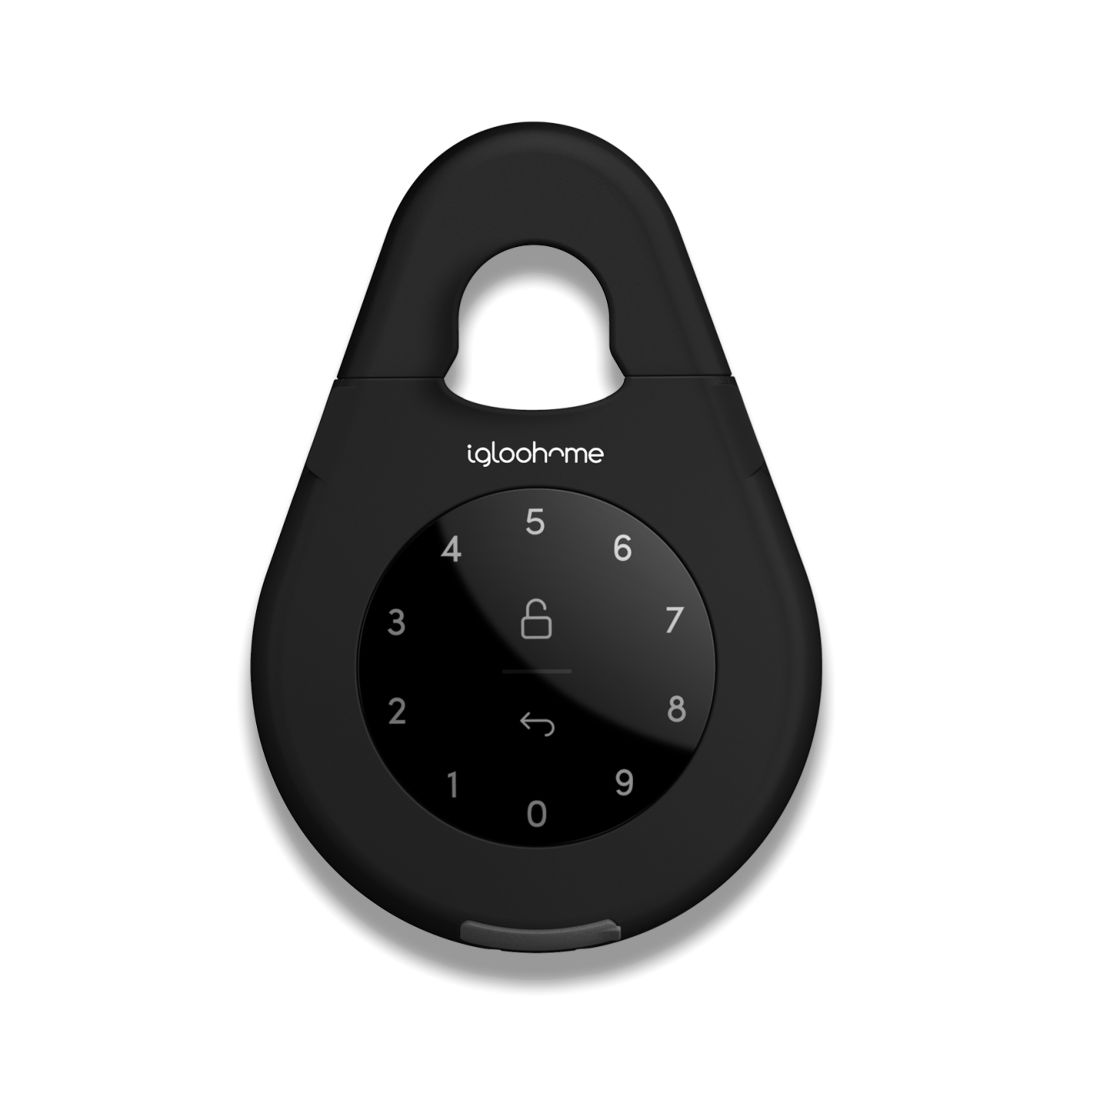 igloohome Smart Keybox 3 Smart Box for Keys & Access Cards